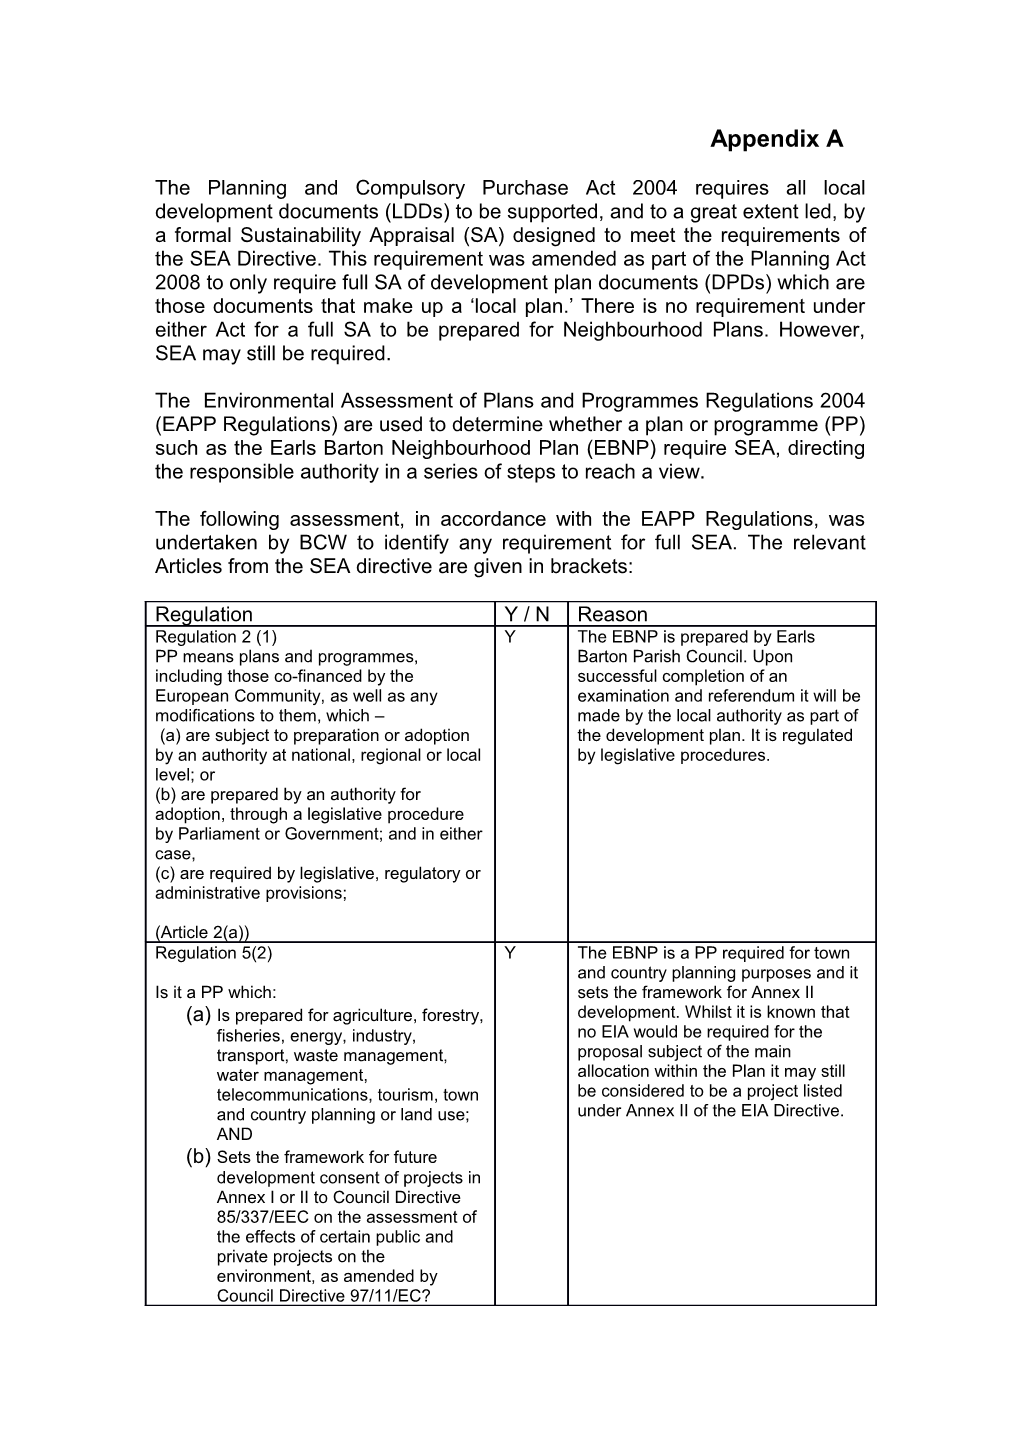 The Environmental Assessment of Plans and Programmes Regulations 2004 (EAPP Regulations)